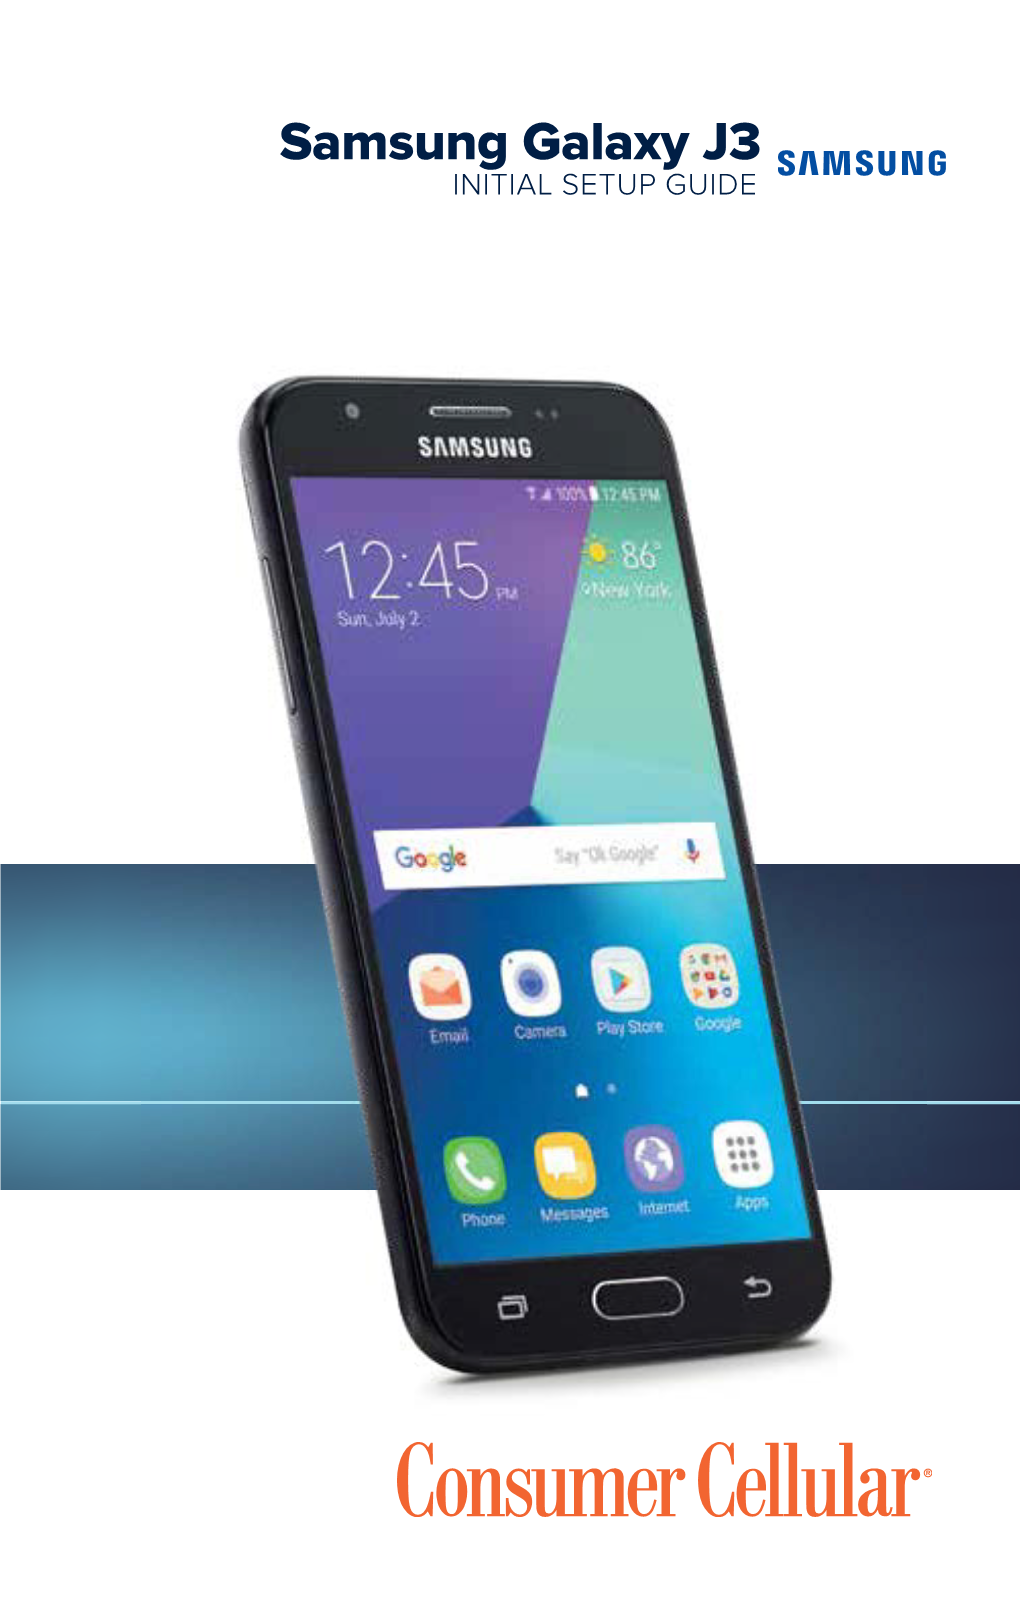 Samsung Galaxy J3 INITIAL SETUP GUIDE INTRODUCTION